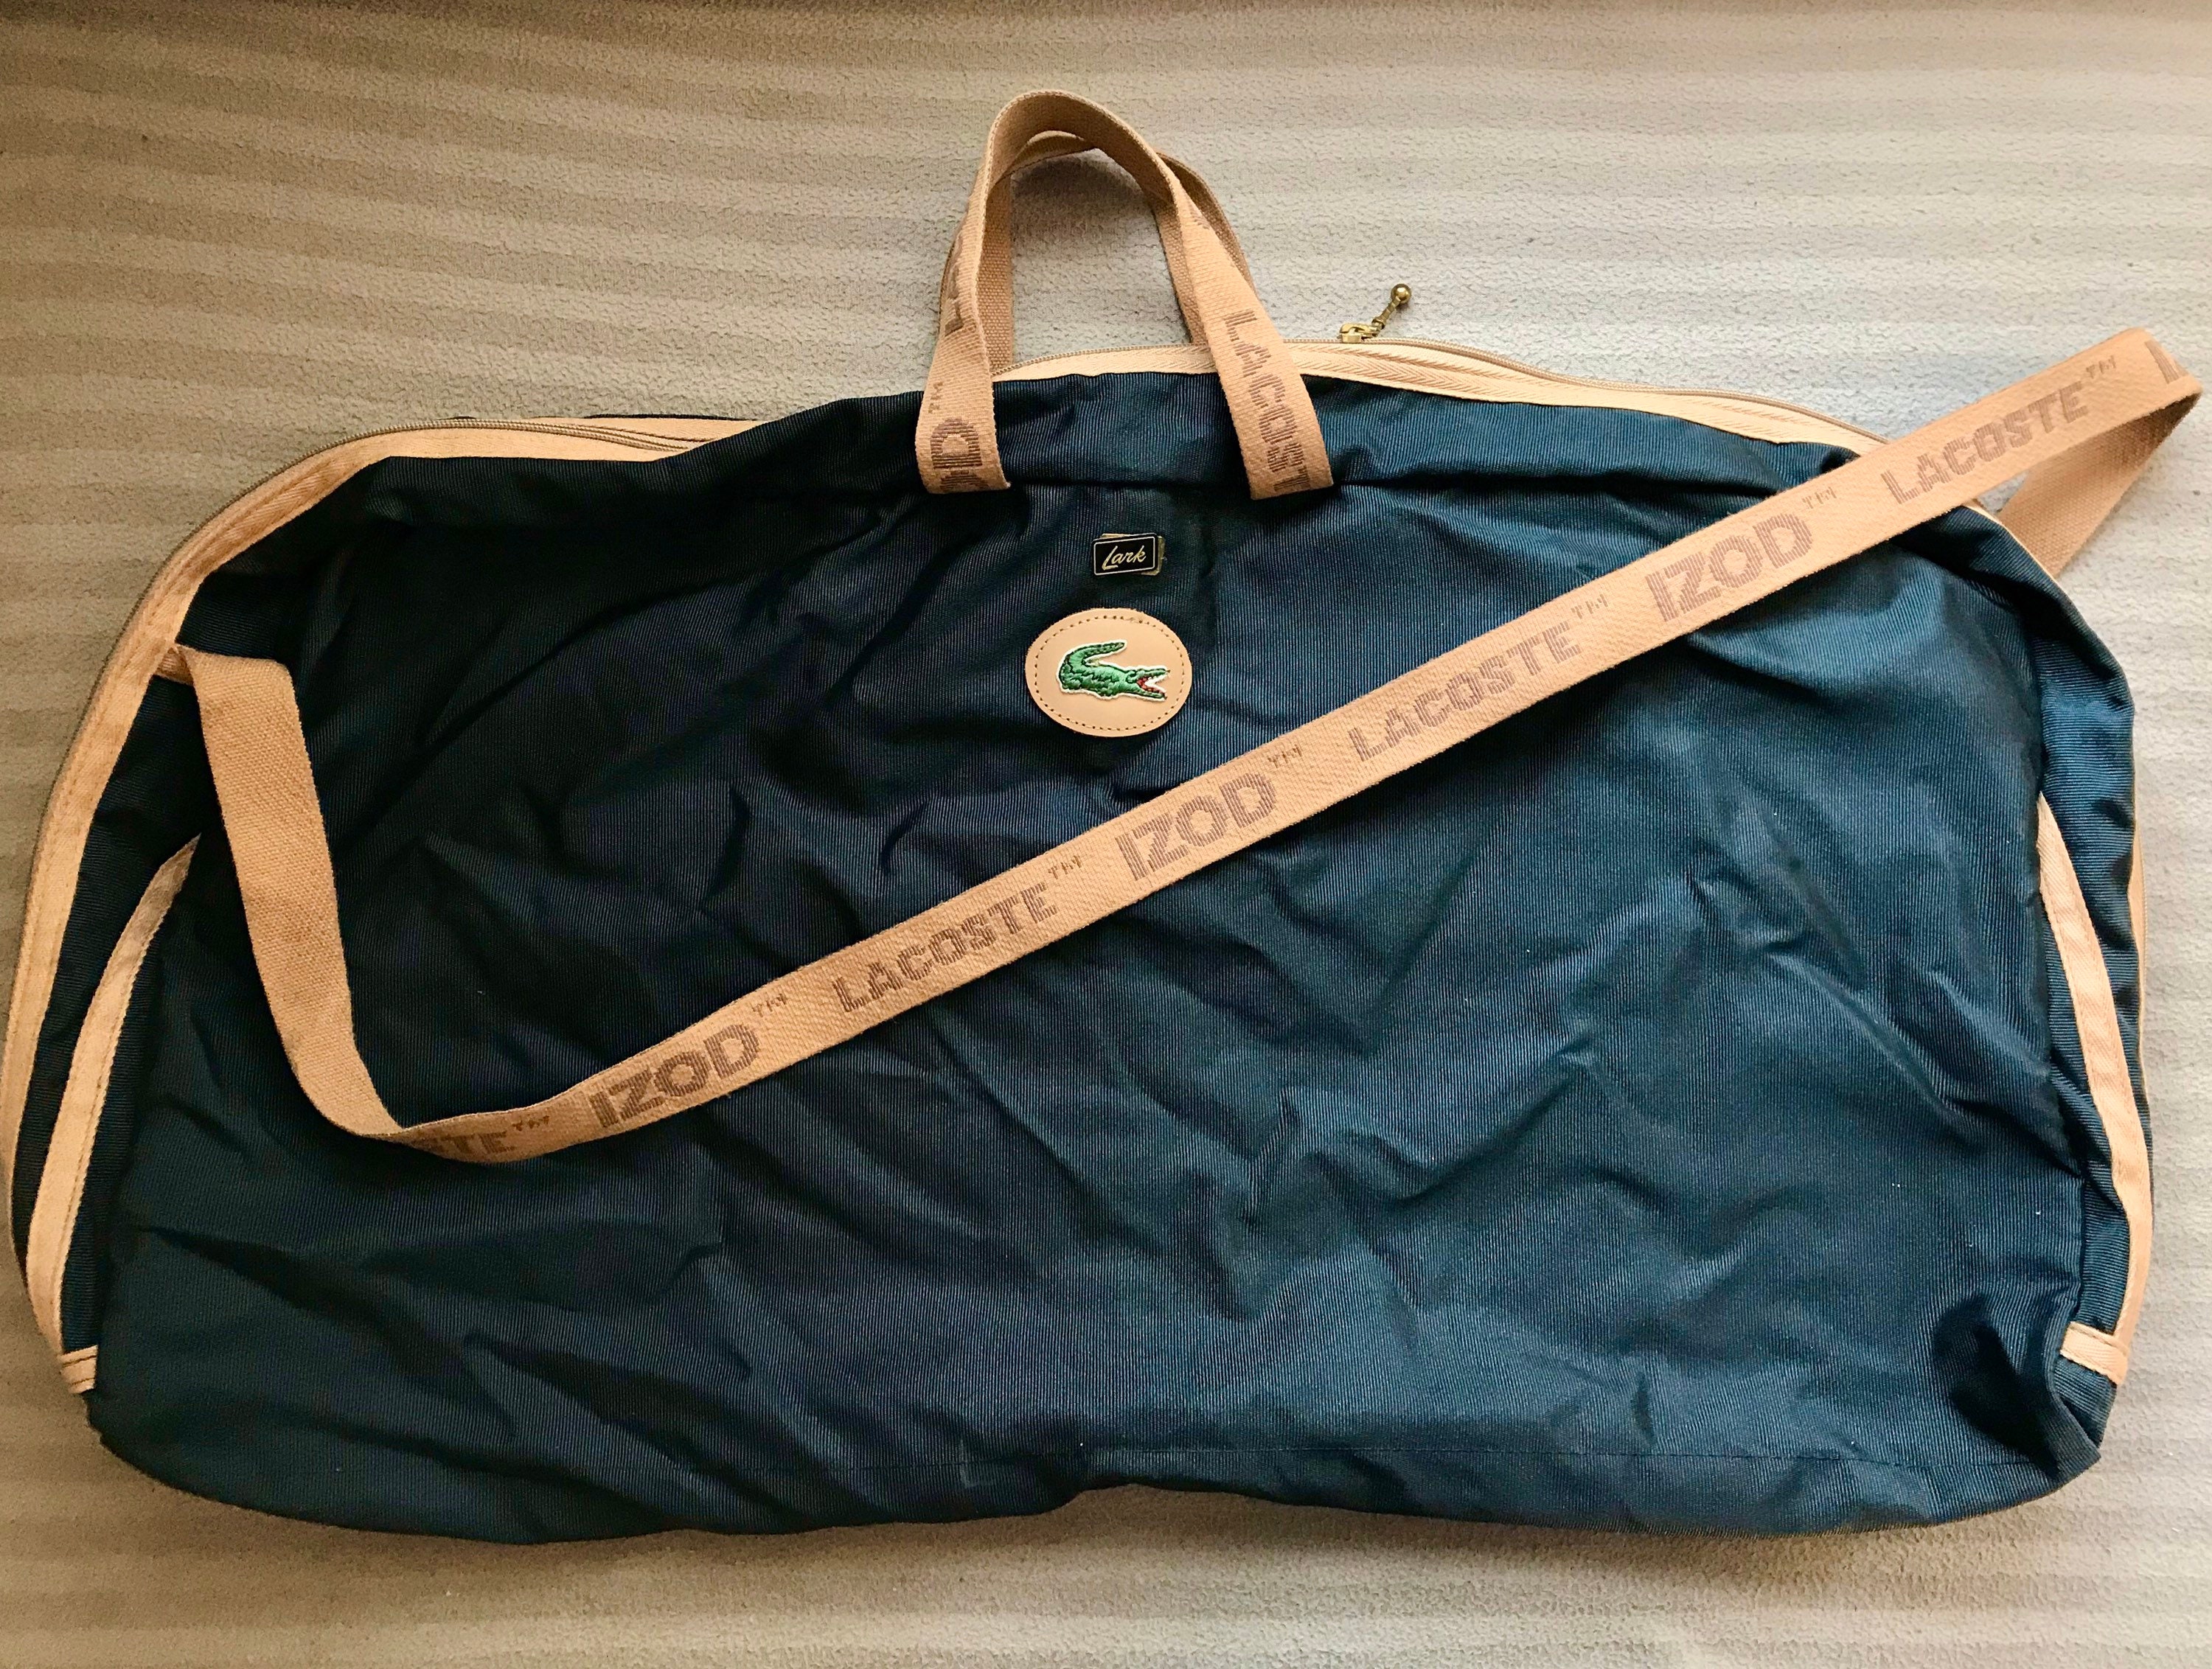 slette Valg fajance Vintage Lacoste Izod by Lark Tennis Bag in Navy Blue Tan - Etsy